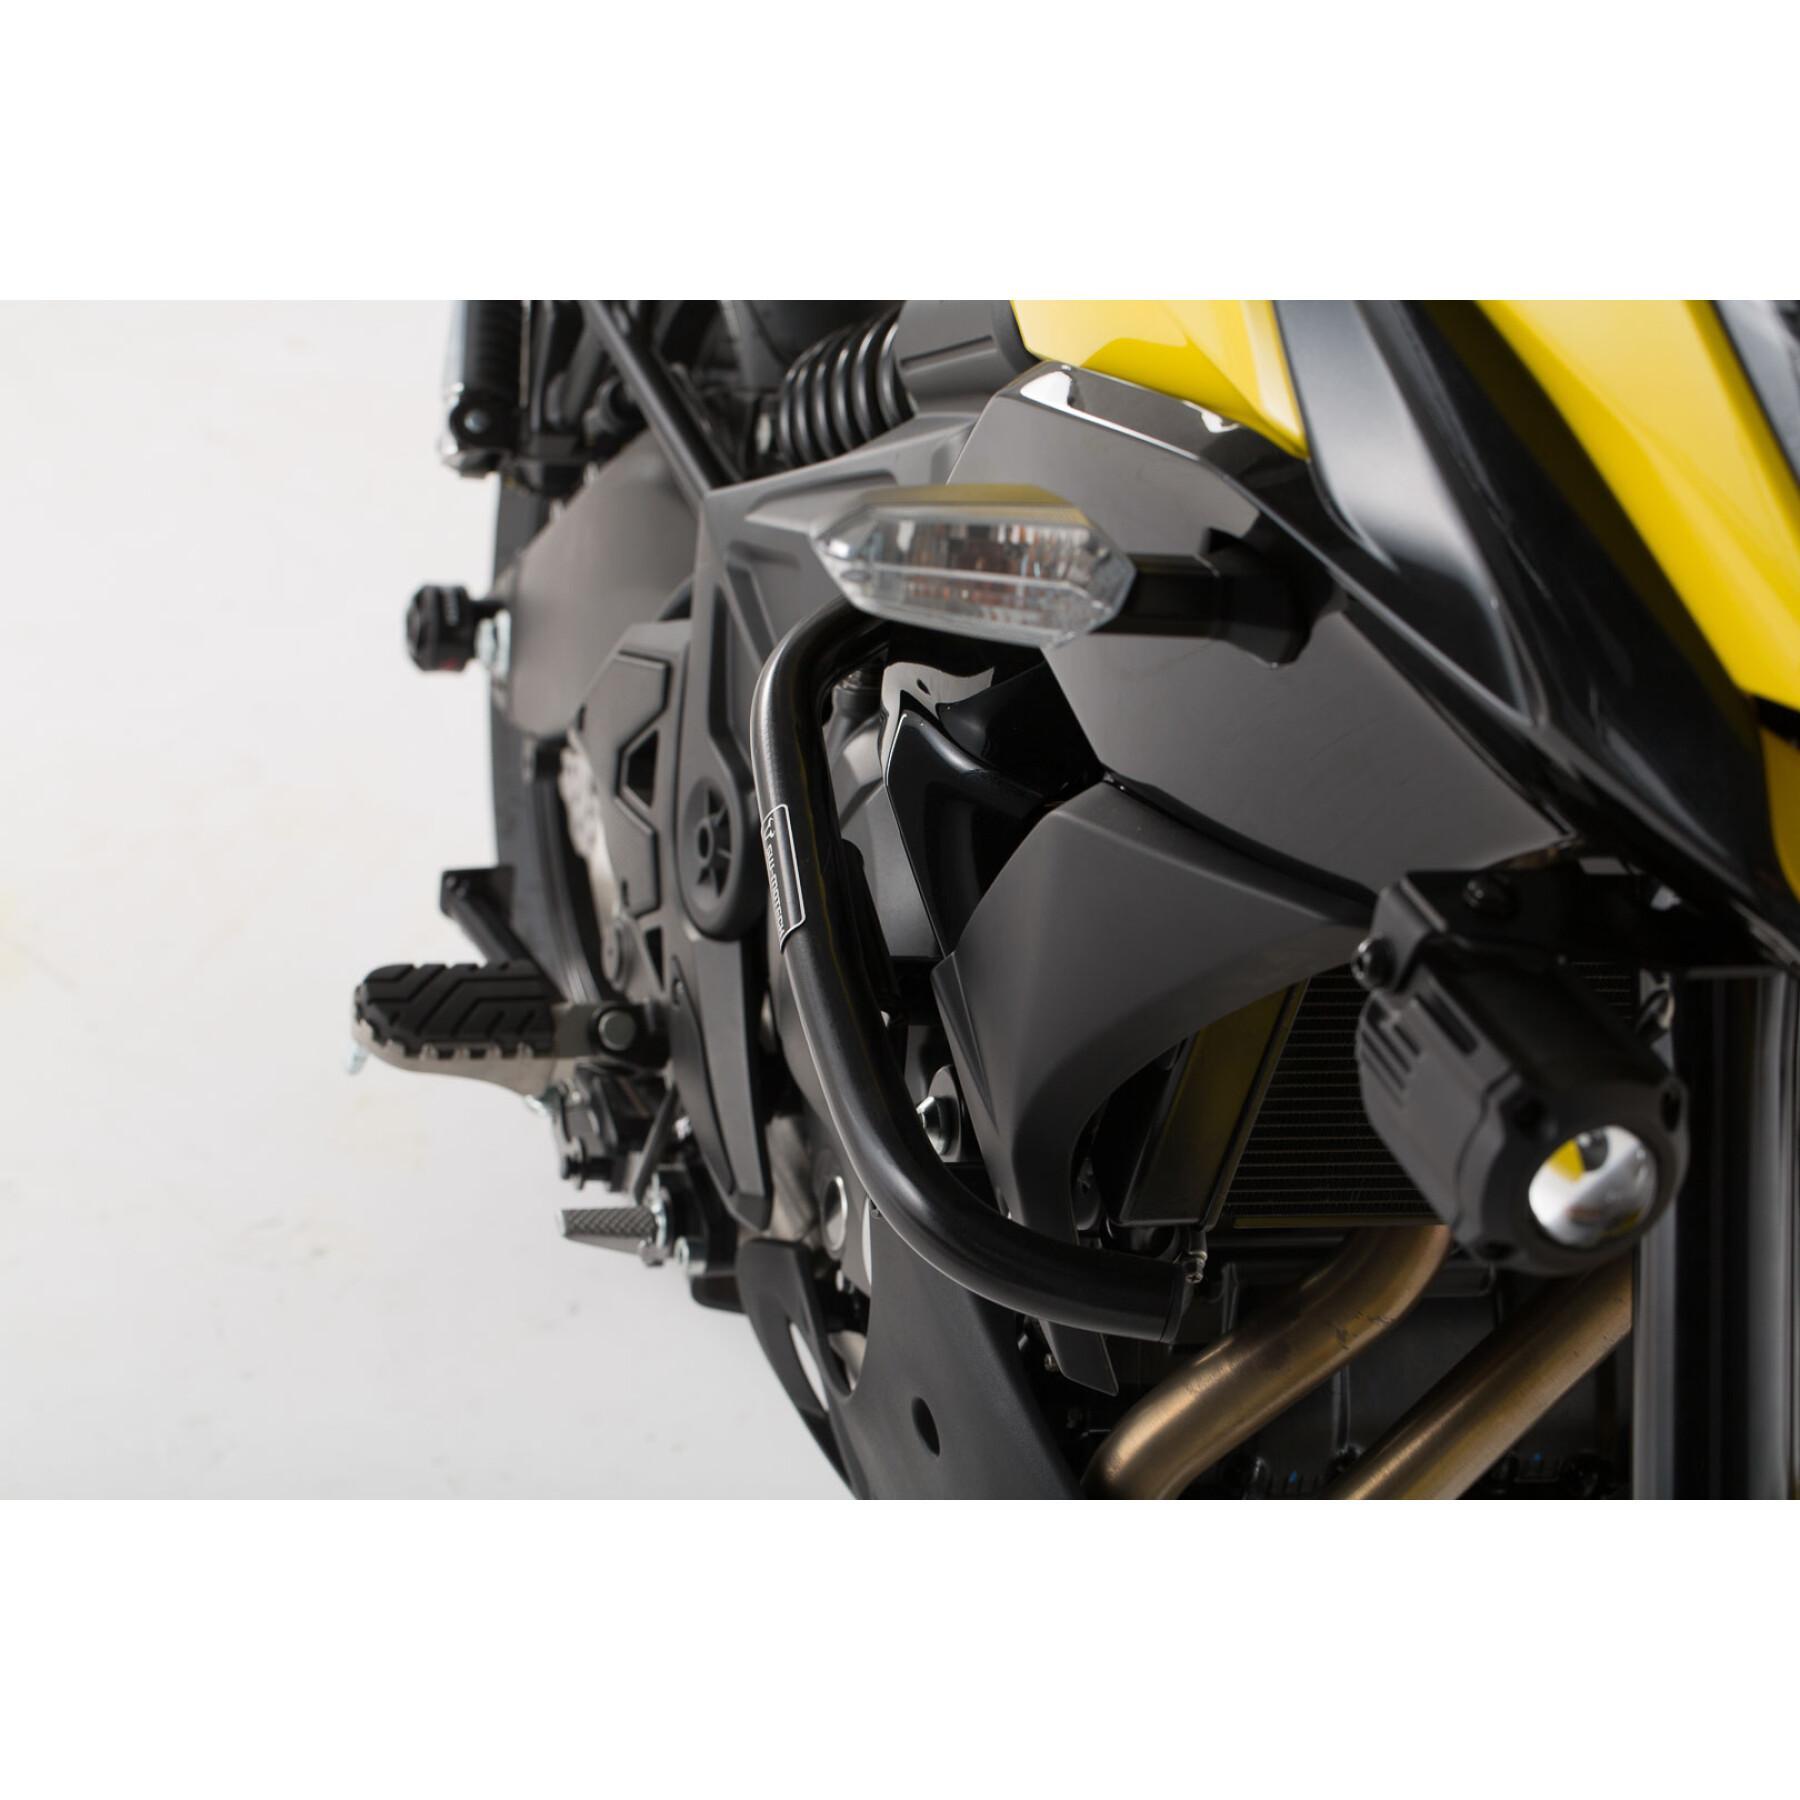 Protecciones para motos Sw-Motech Crashbar Kawasaki Versys 650 (15-)